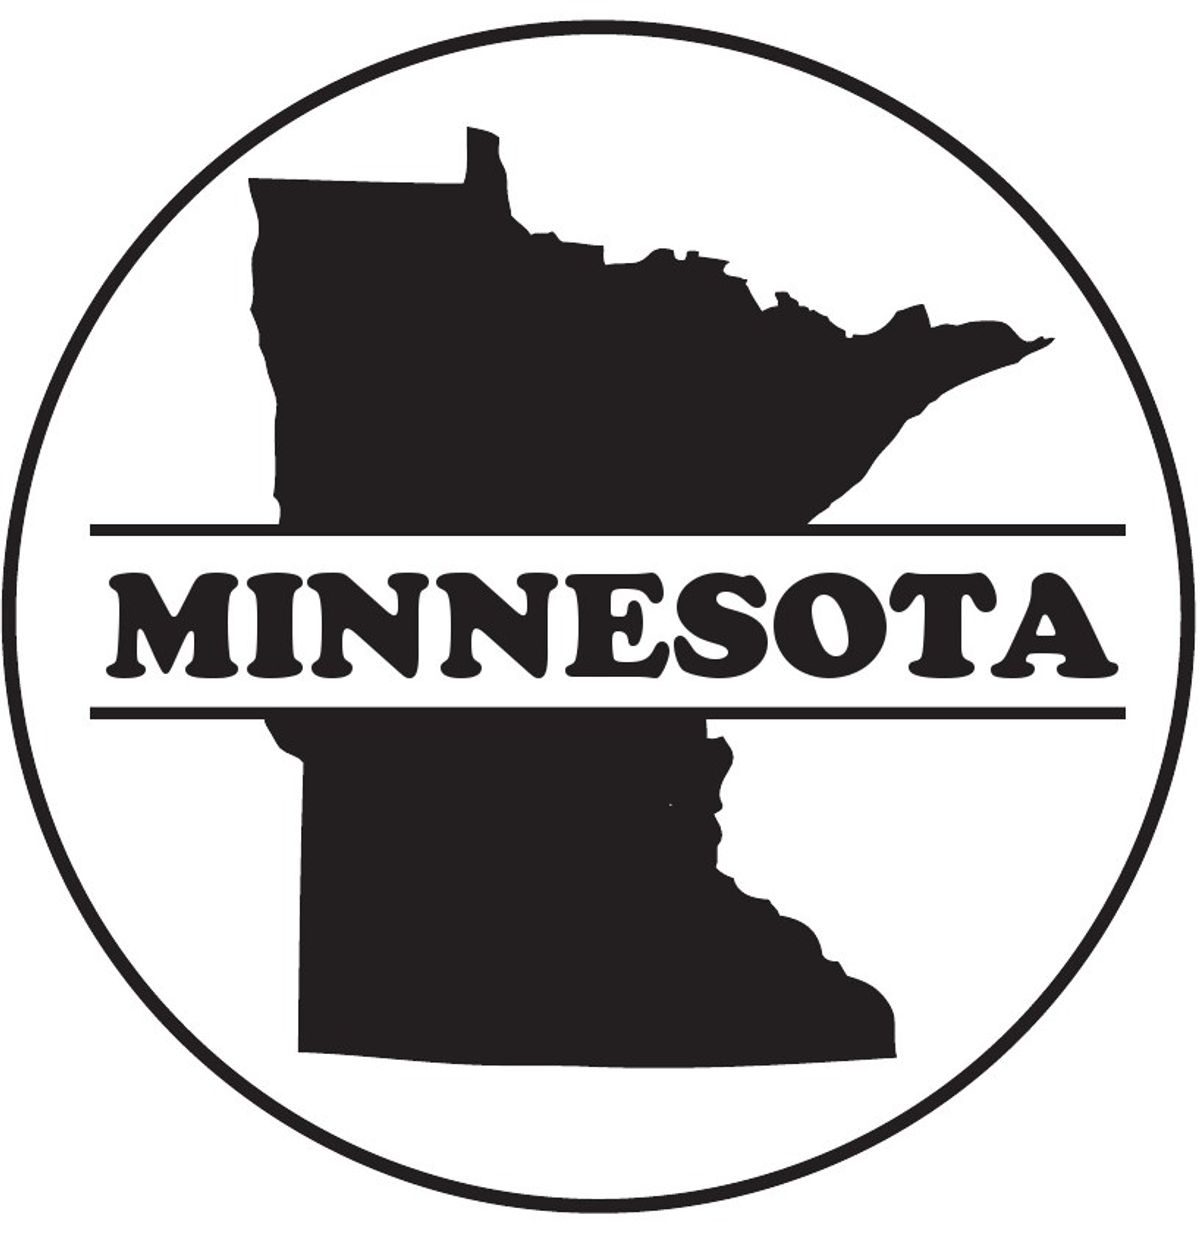 11 Reasons Minnesota Is Relevant